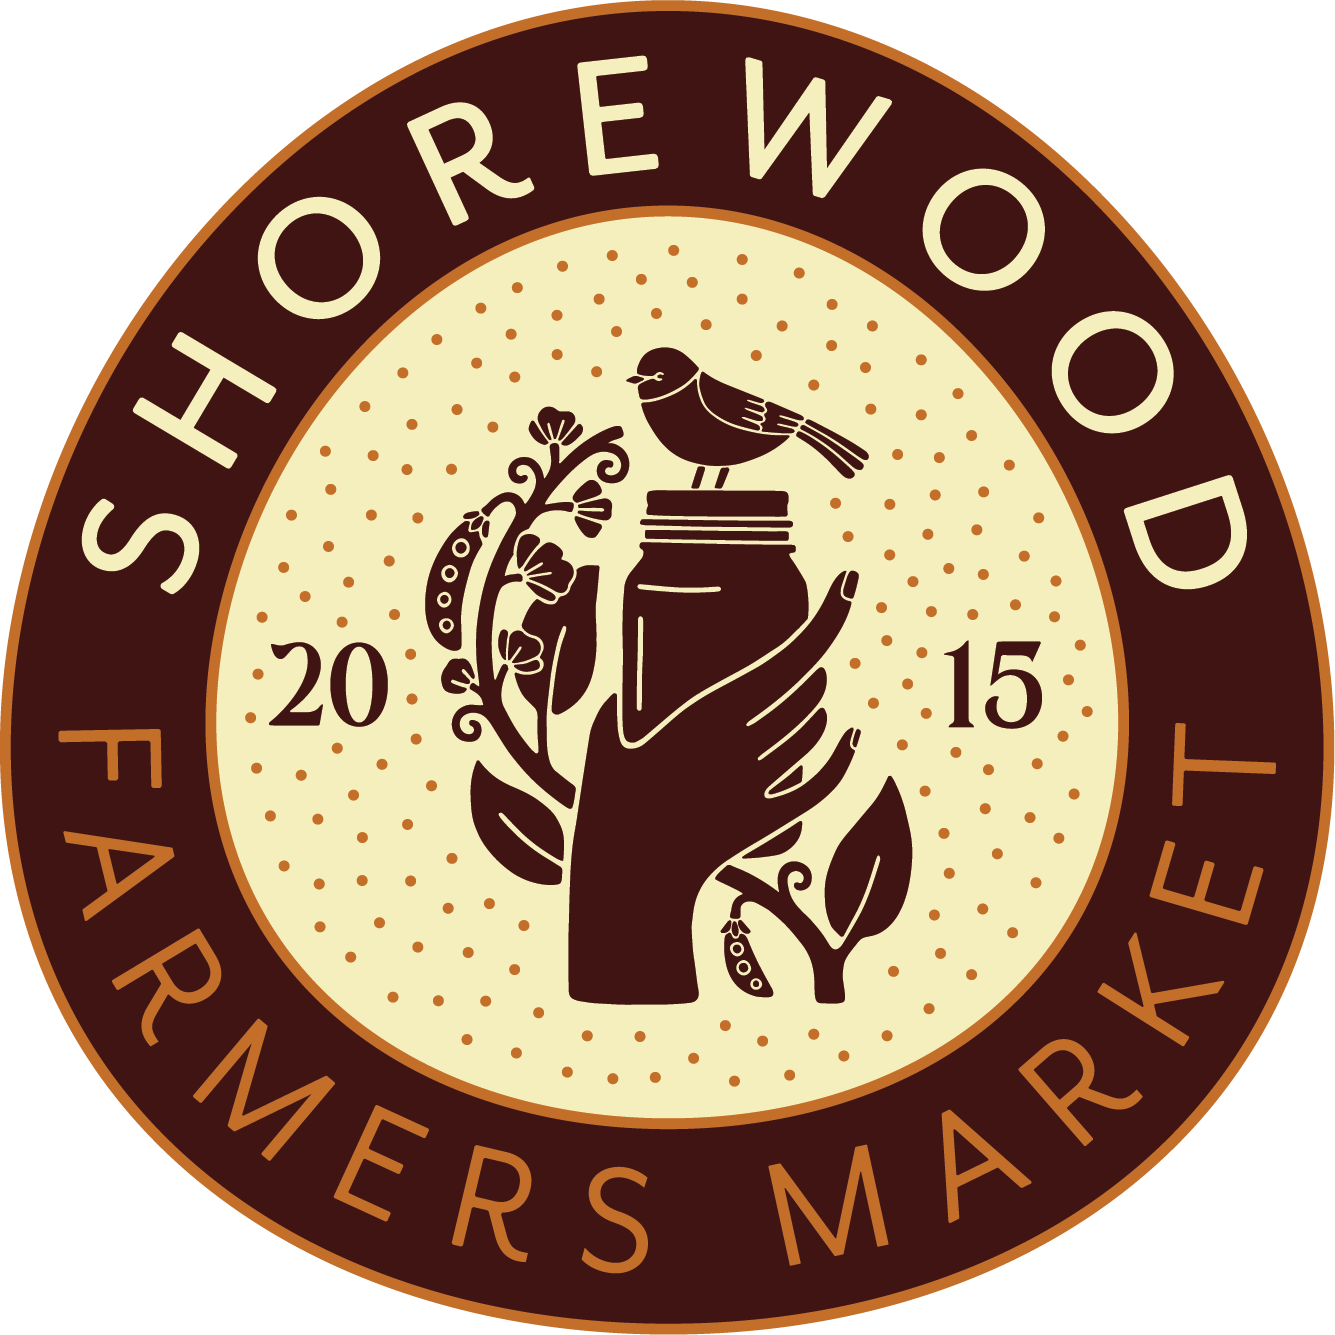 Shorewood Farmers Market | Established in 2015 in the Village of Shorewood, Milwaukee, Wisconsin